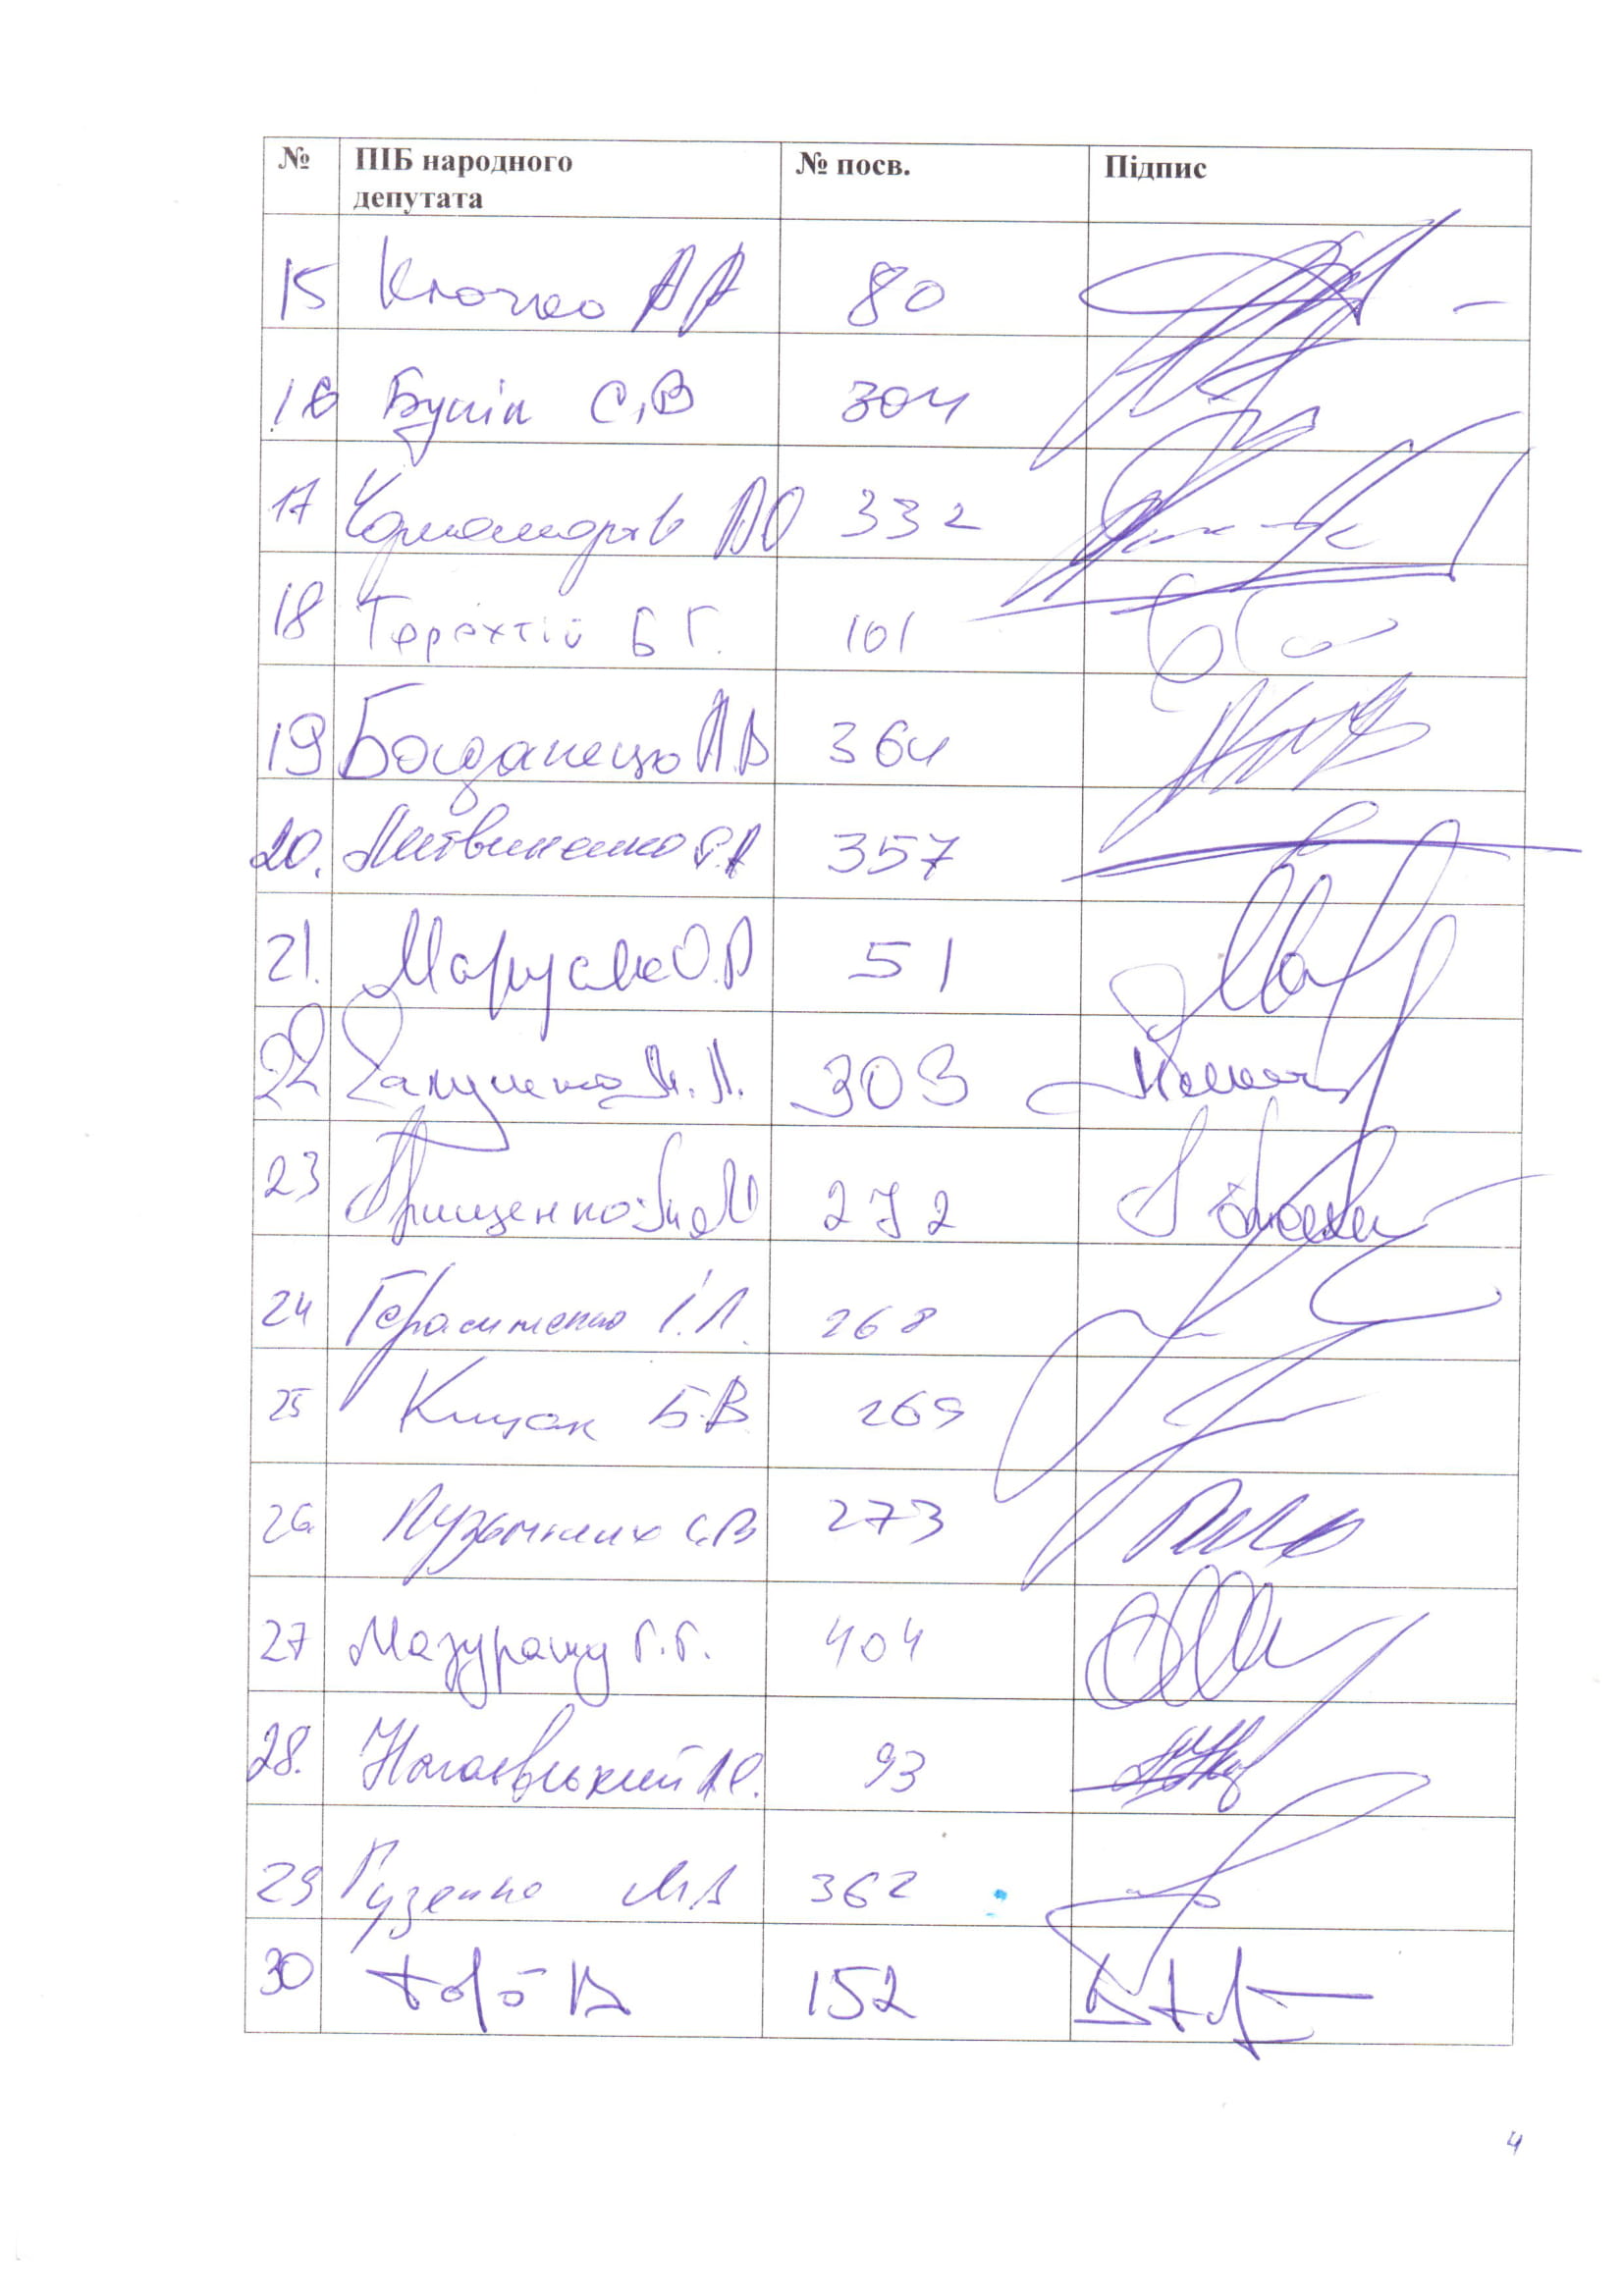 151 нардеп подписал обращение к Венедиктовой на фоне давления НАБУ на холдинг Бахматюка. Фото